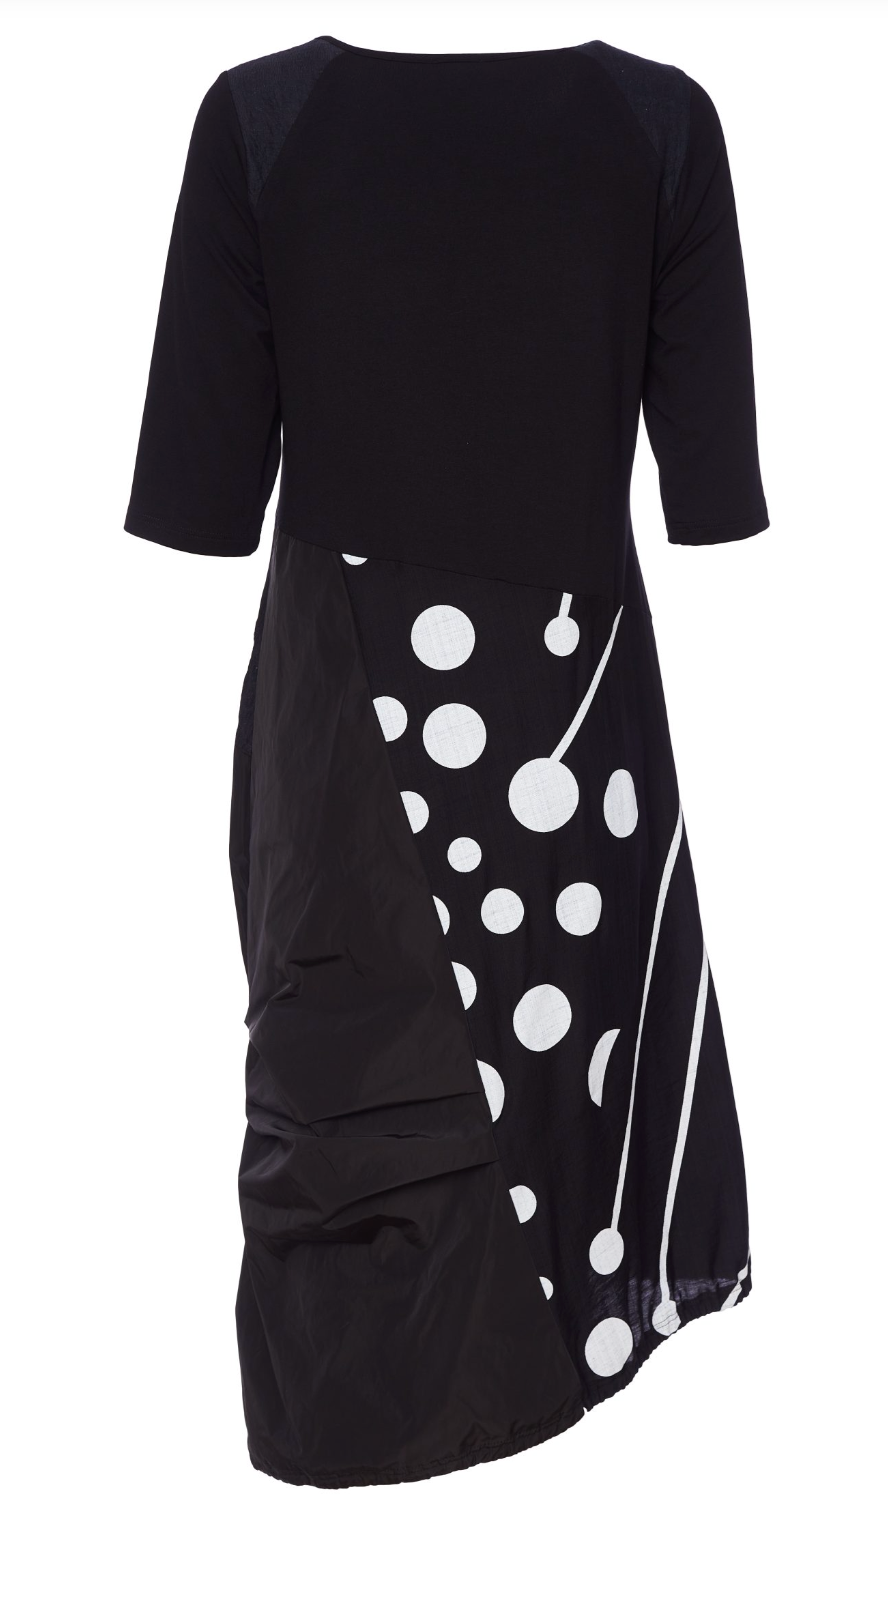 Spot Print Drawstring Dress